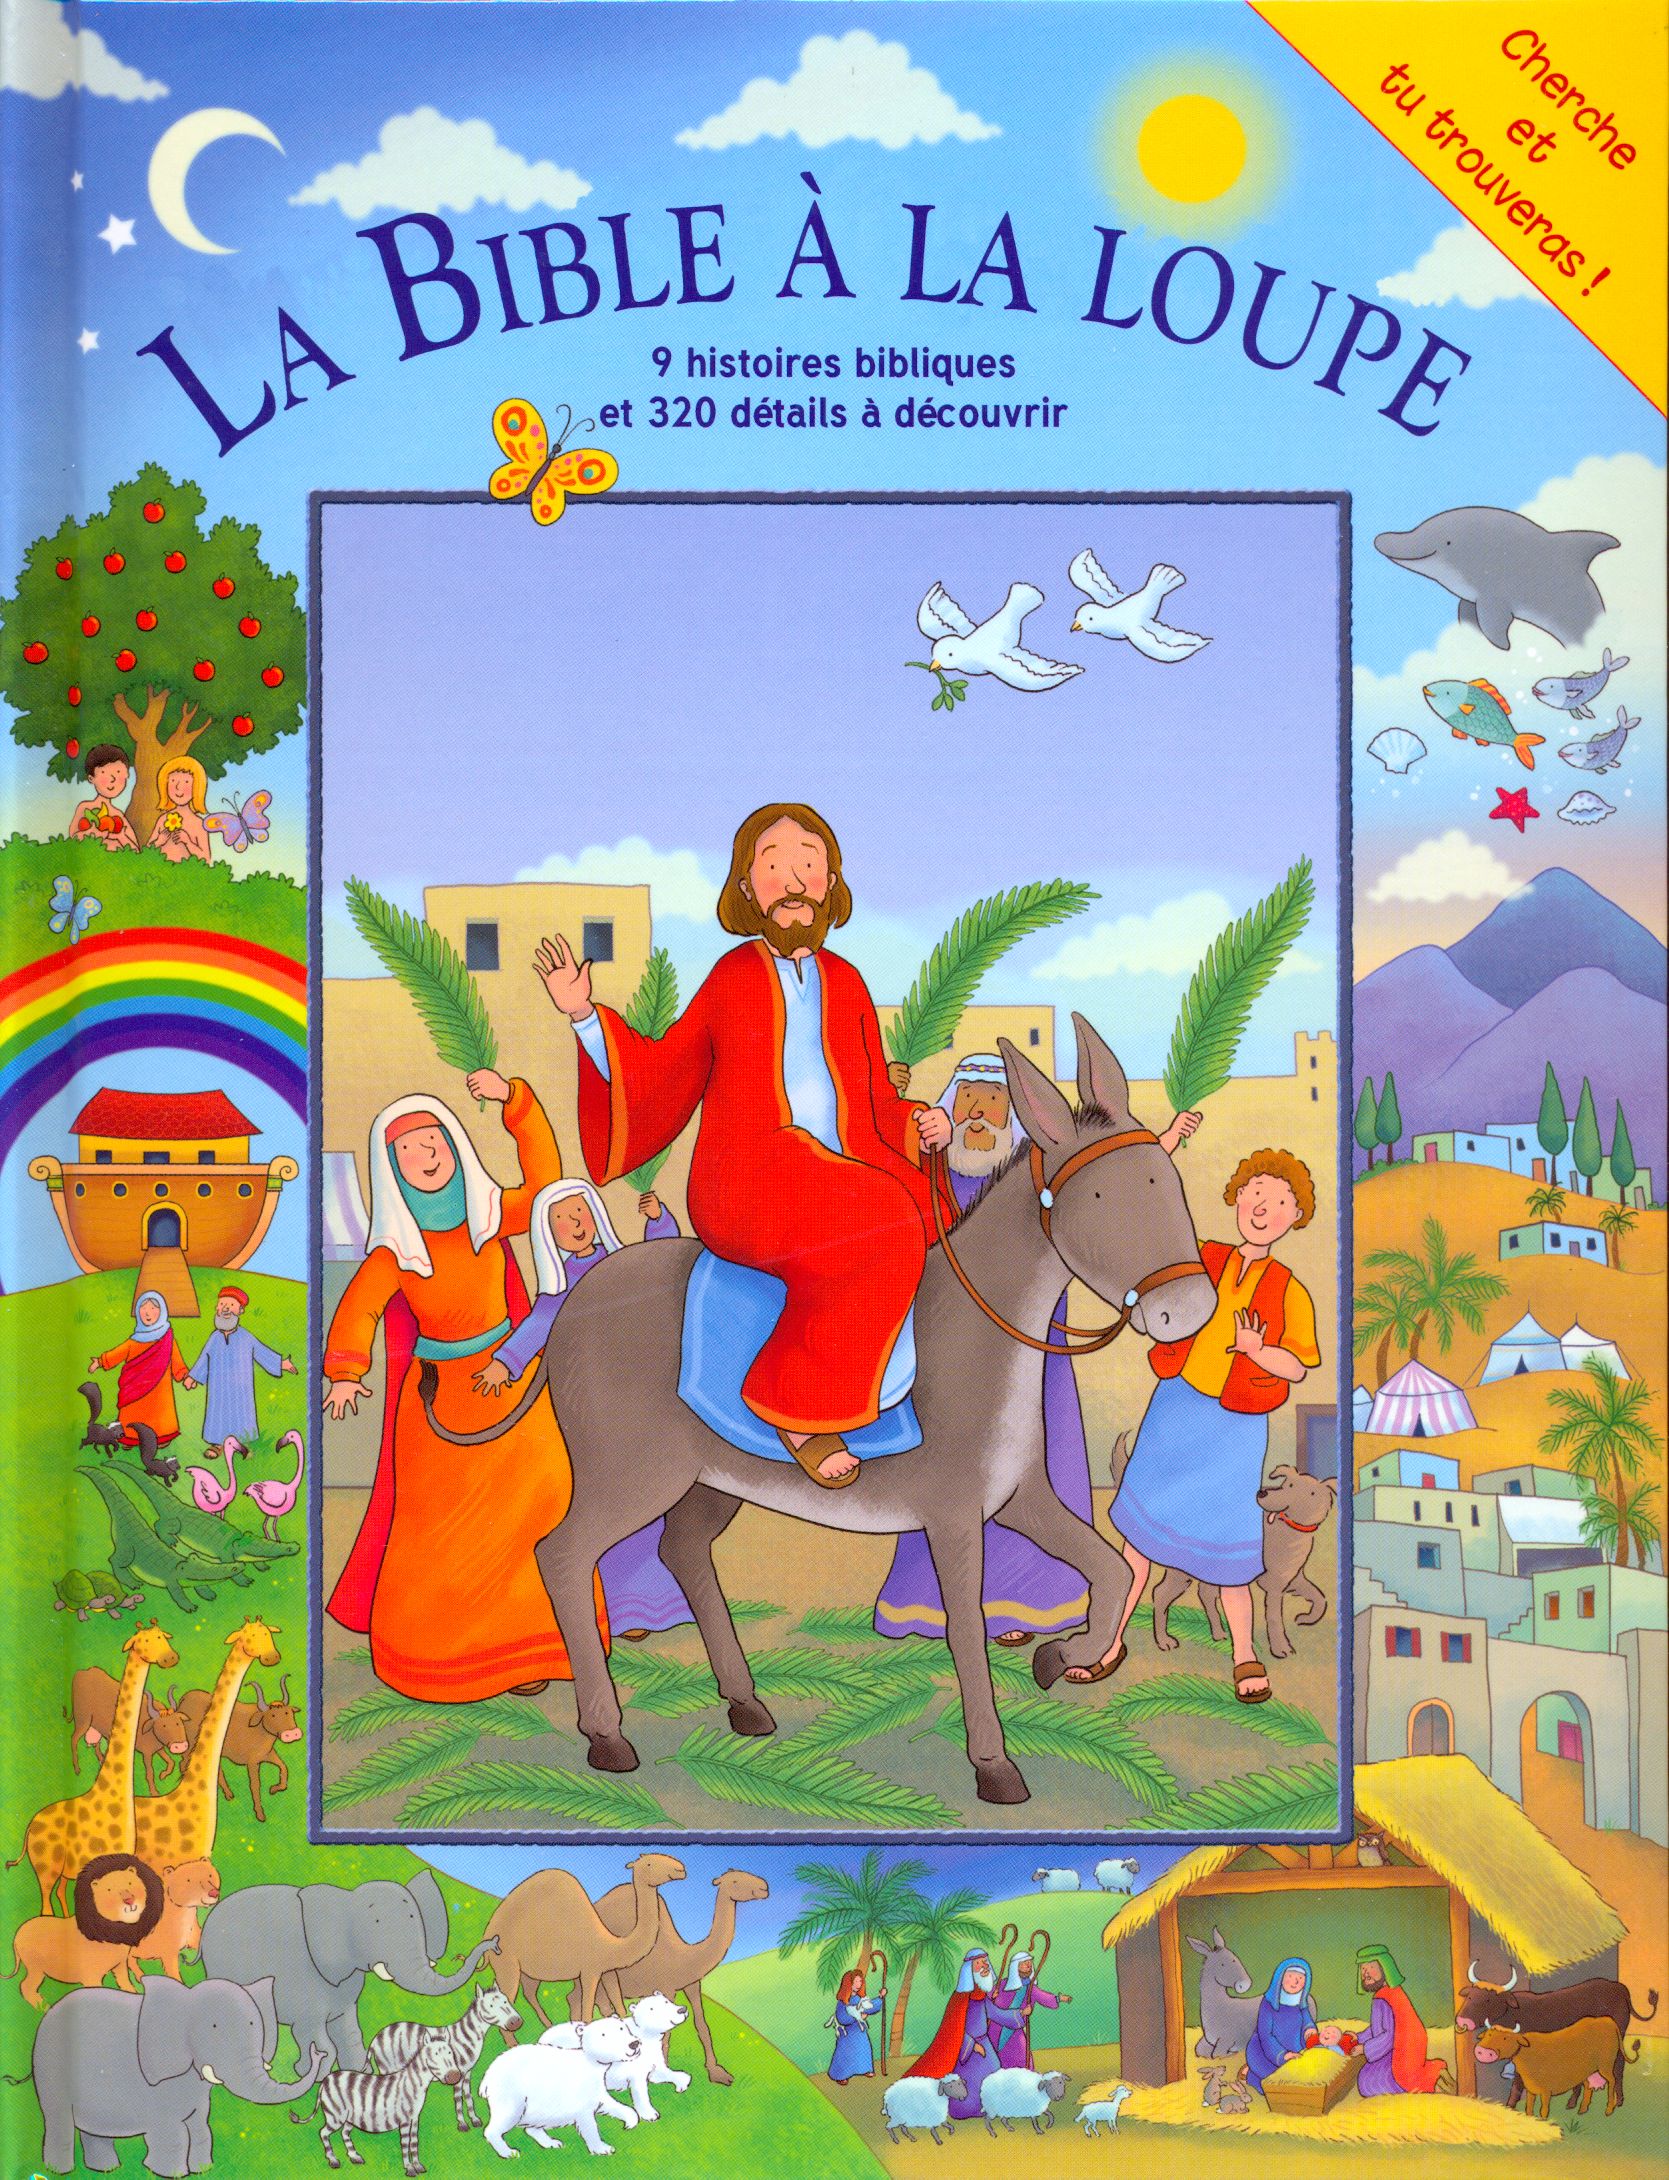 BIBLE A LA LOUPE (LA)